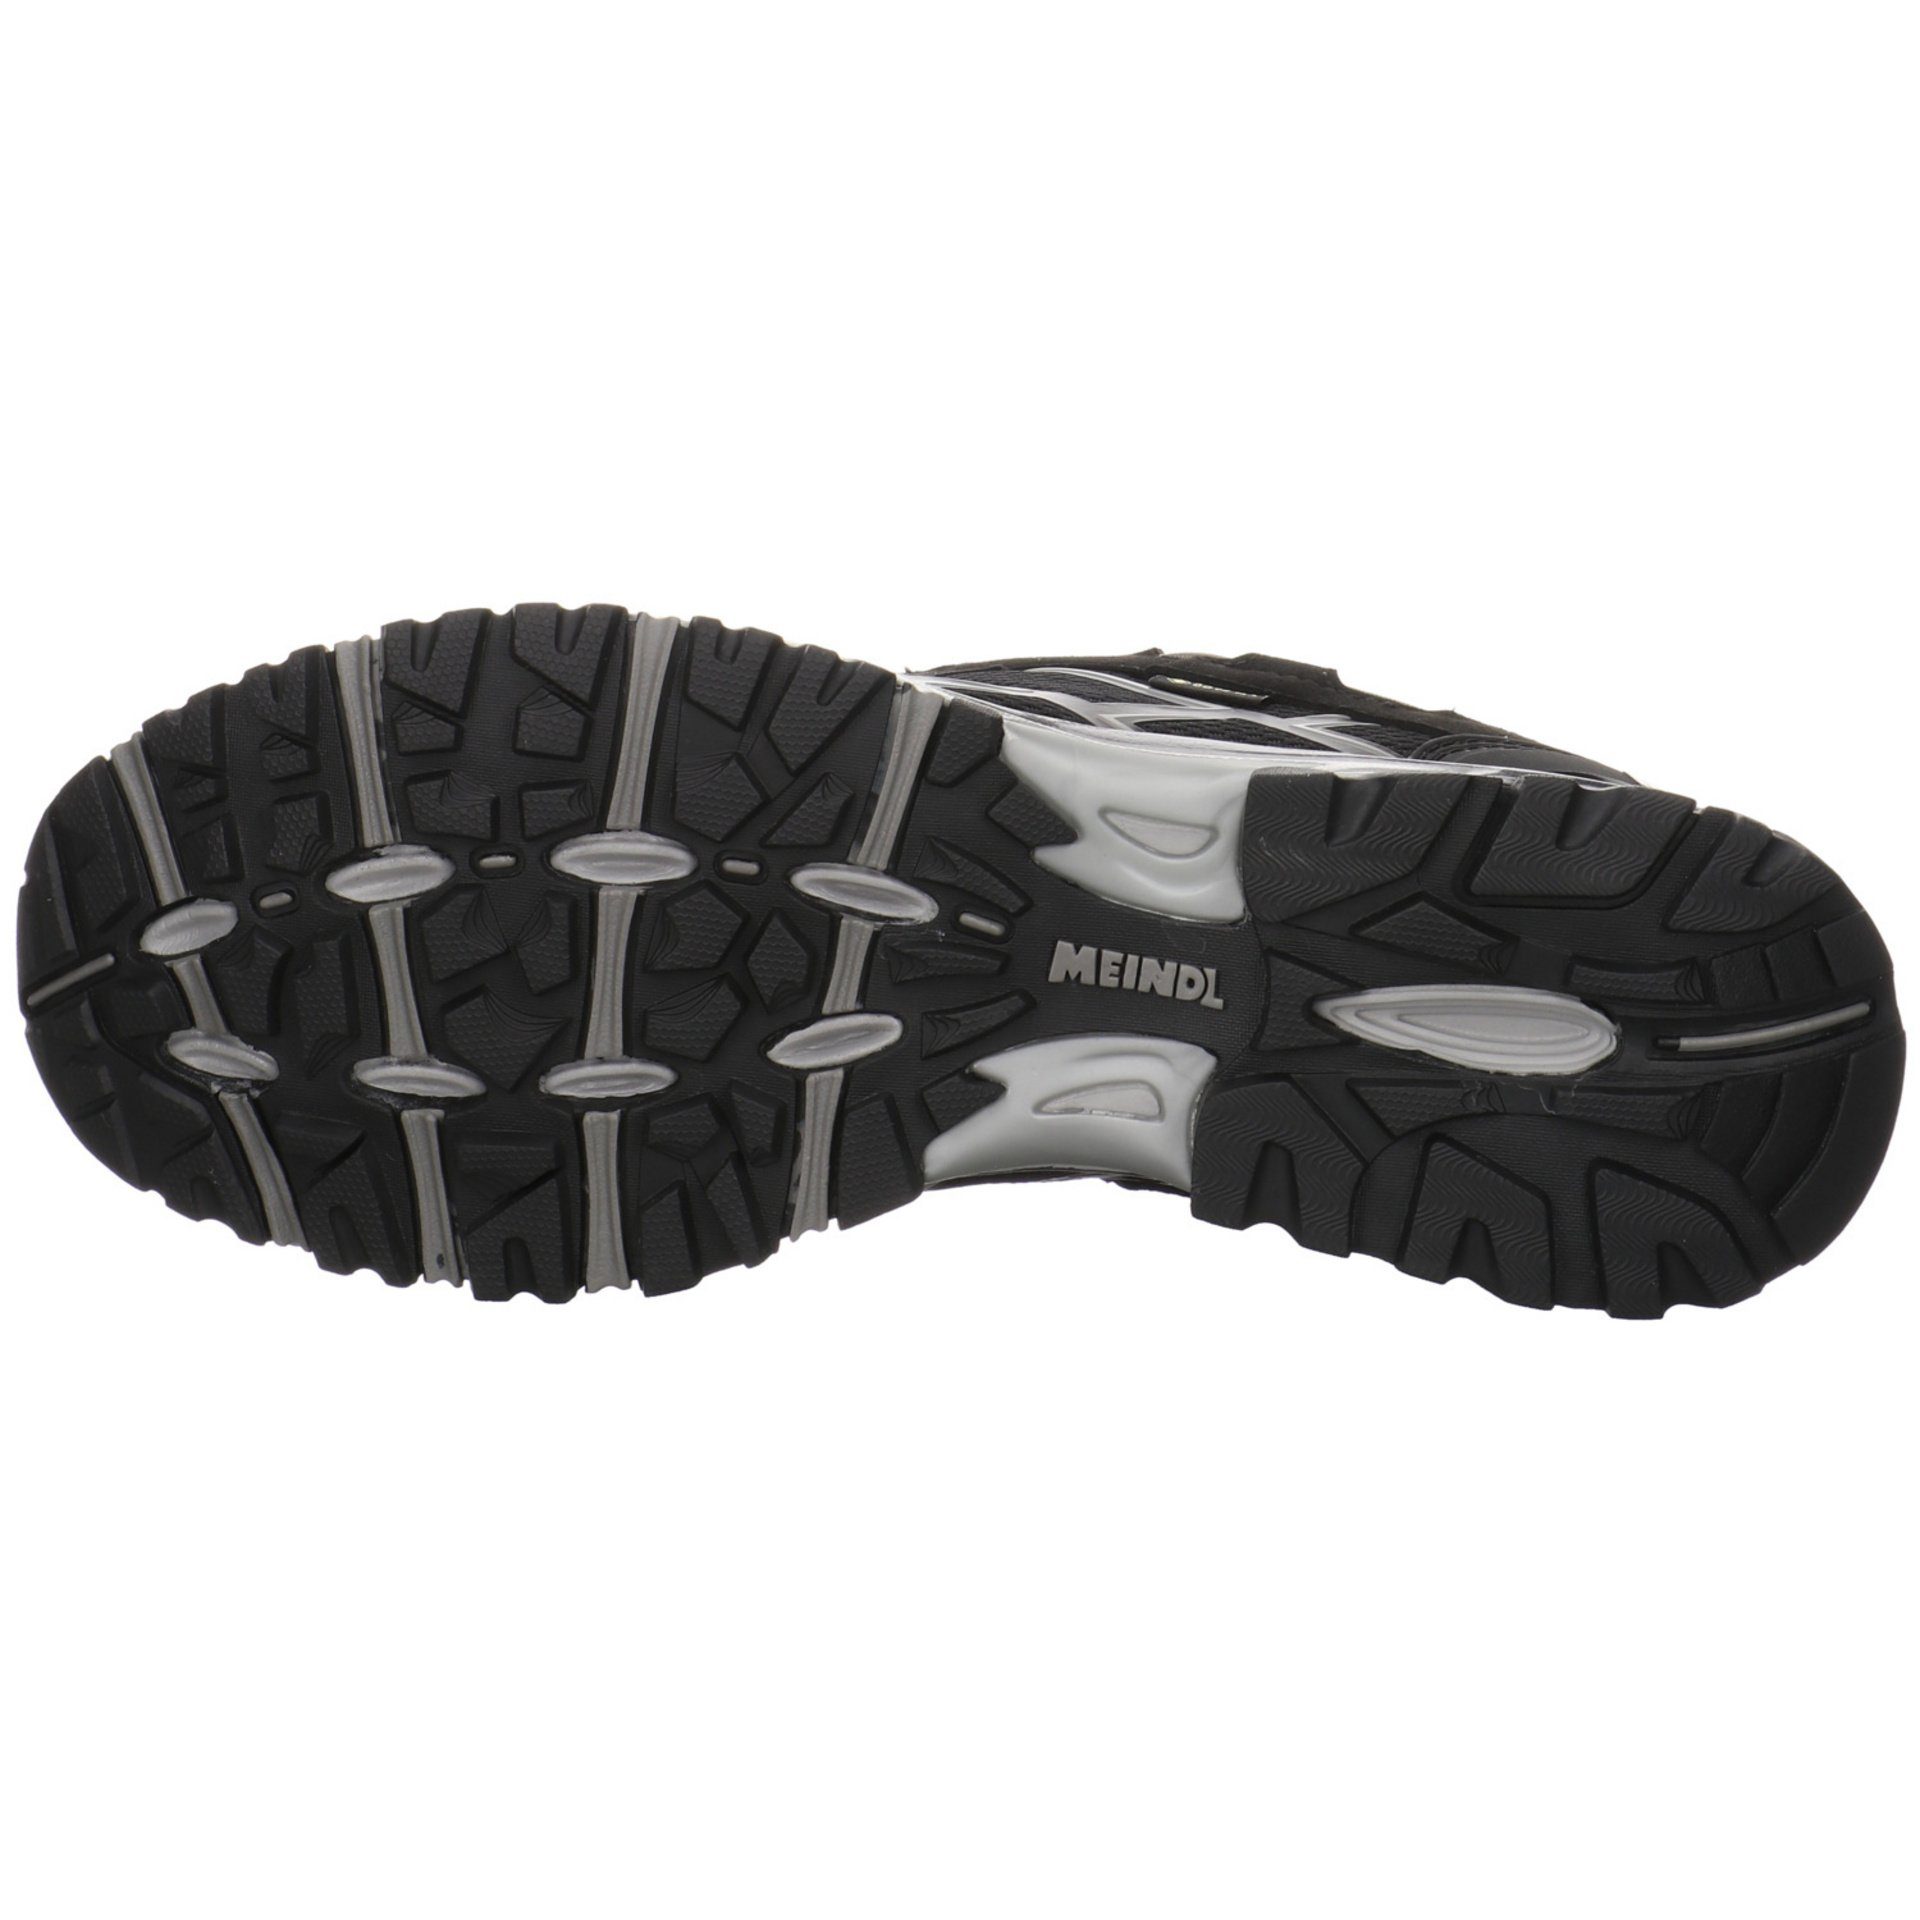 Outdoorschuh Herren Meindl black/grey Textil GTX Caribe Schuhe Outdoor Outdoorschuh